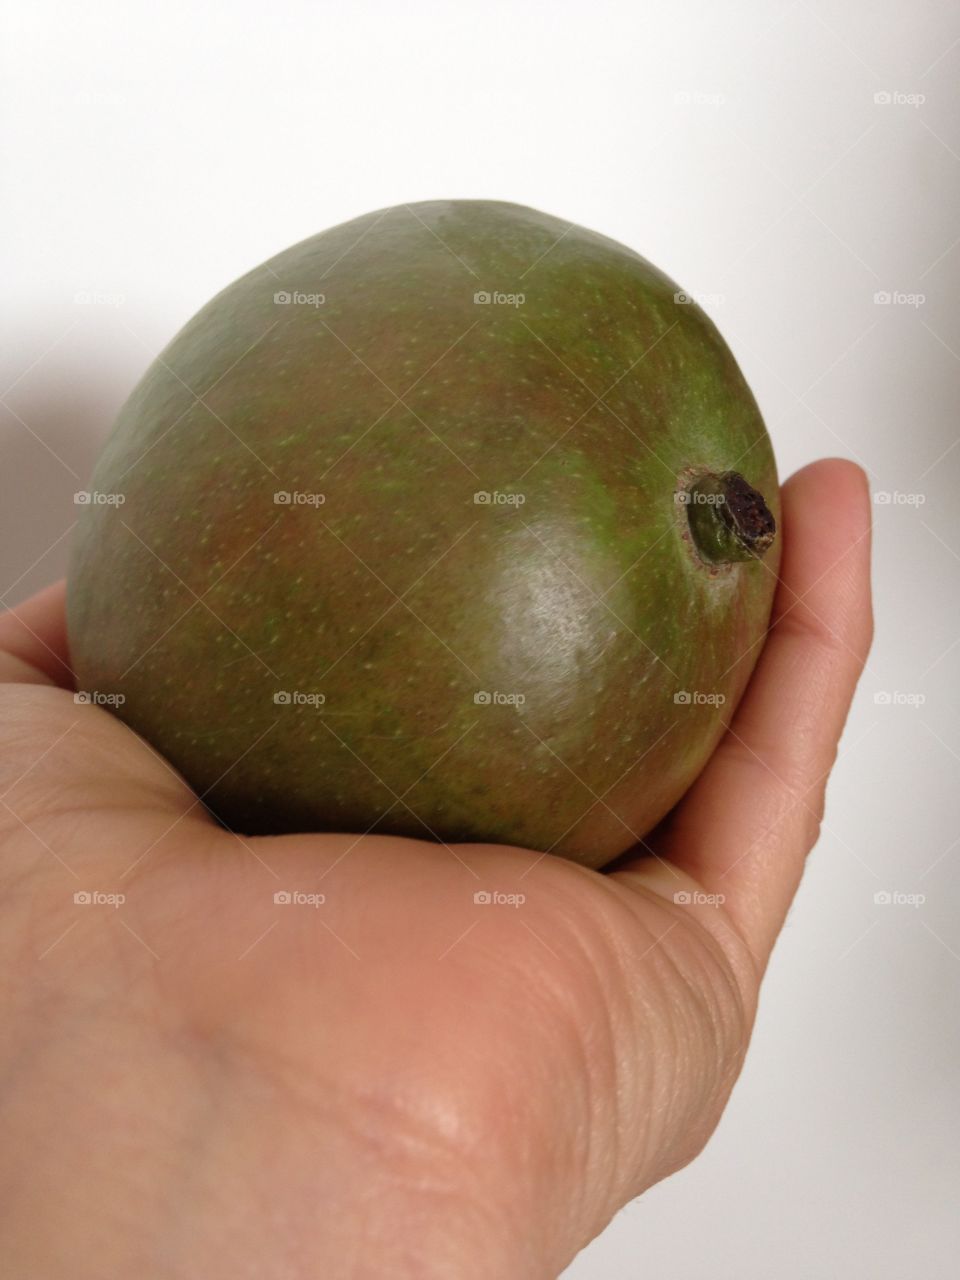 Holding avocado 